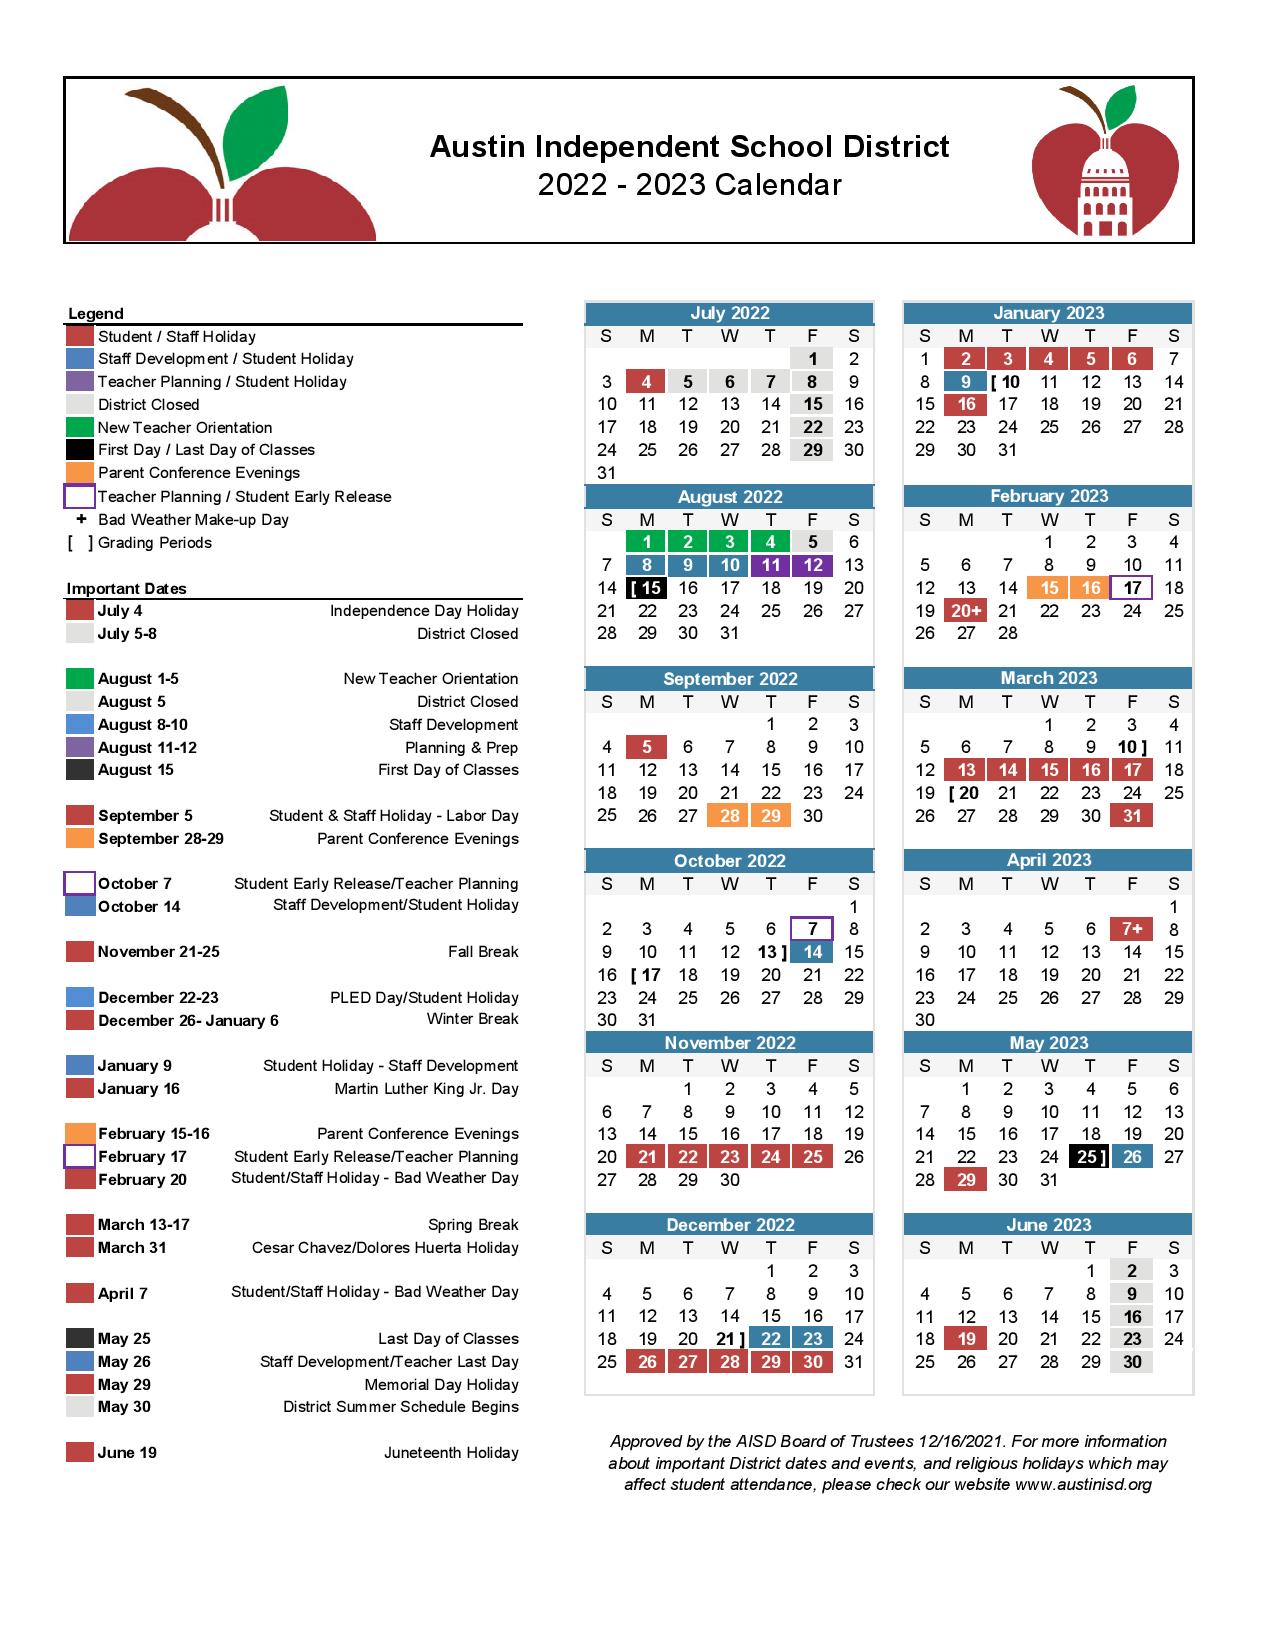 Austin Independent School District Calendar Page 001 